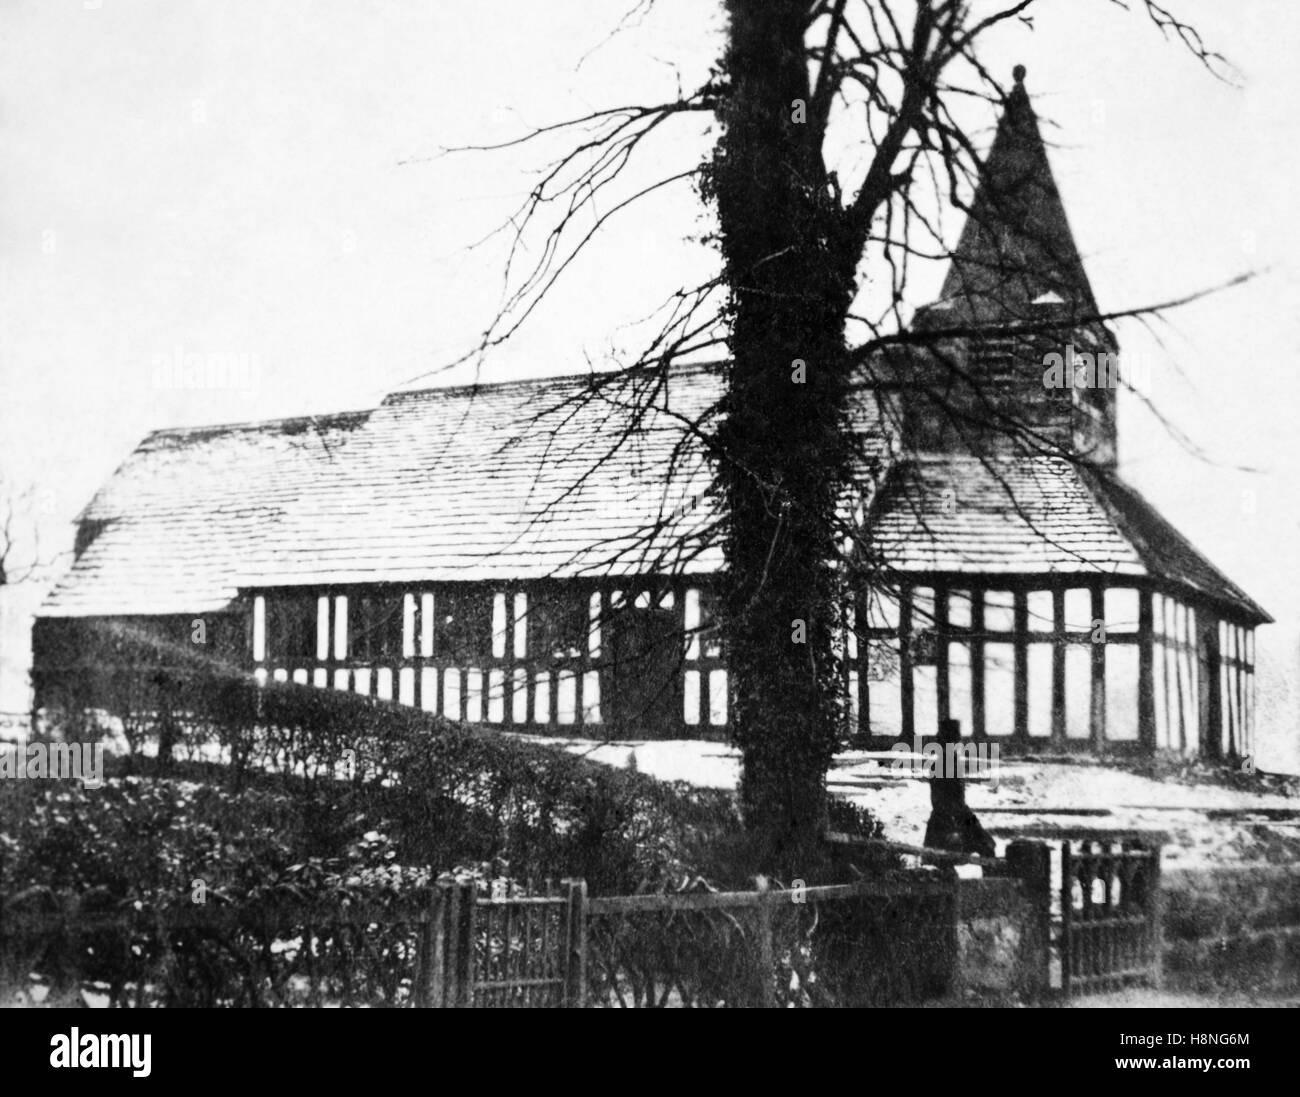 UK, England, Cheshire, Marton, St James & St Paul’s church in snow, historic image circa 1865 Stock Photo